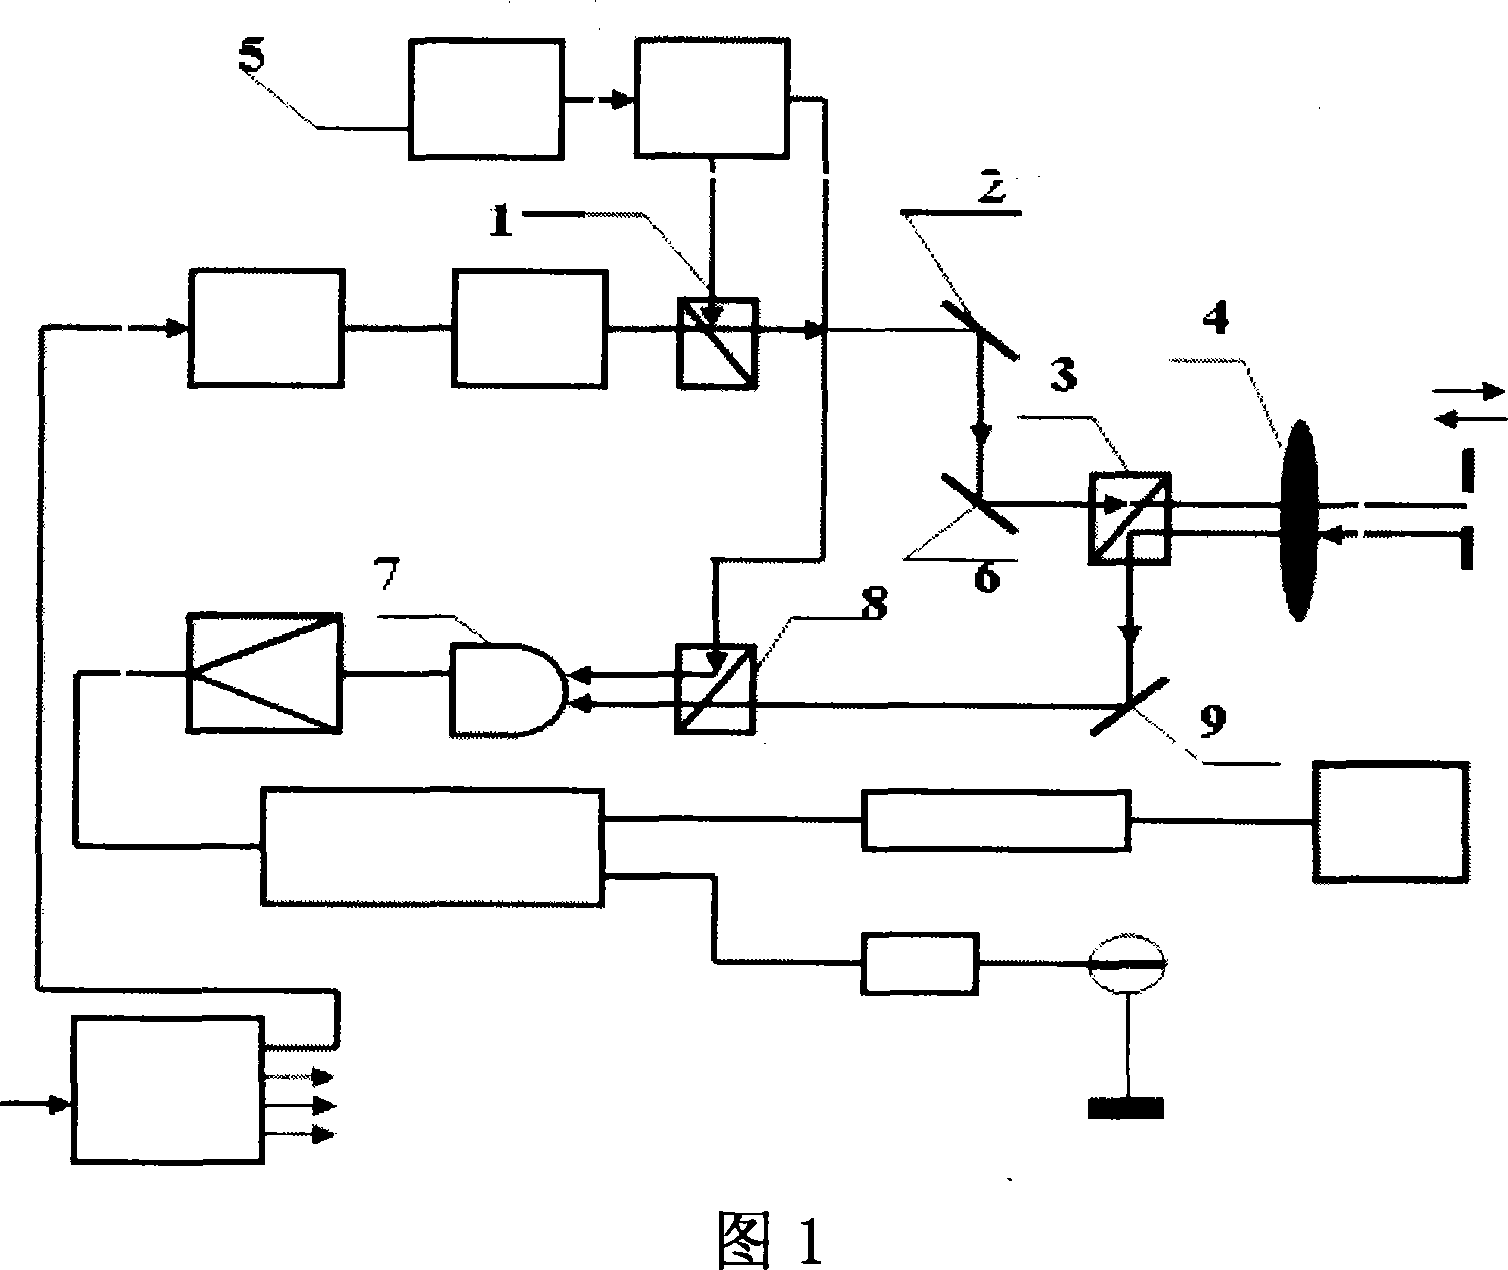 Photoelectric heterodyne detection circuit